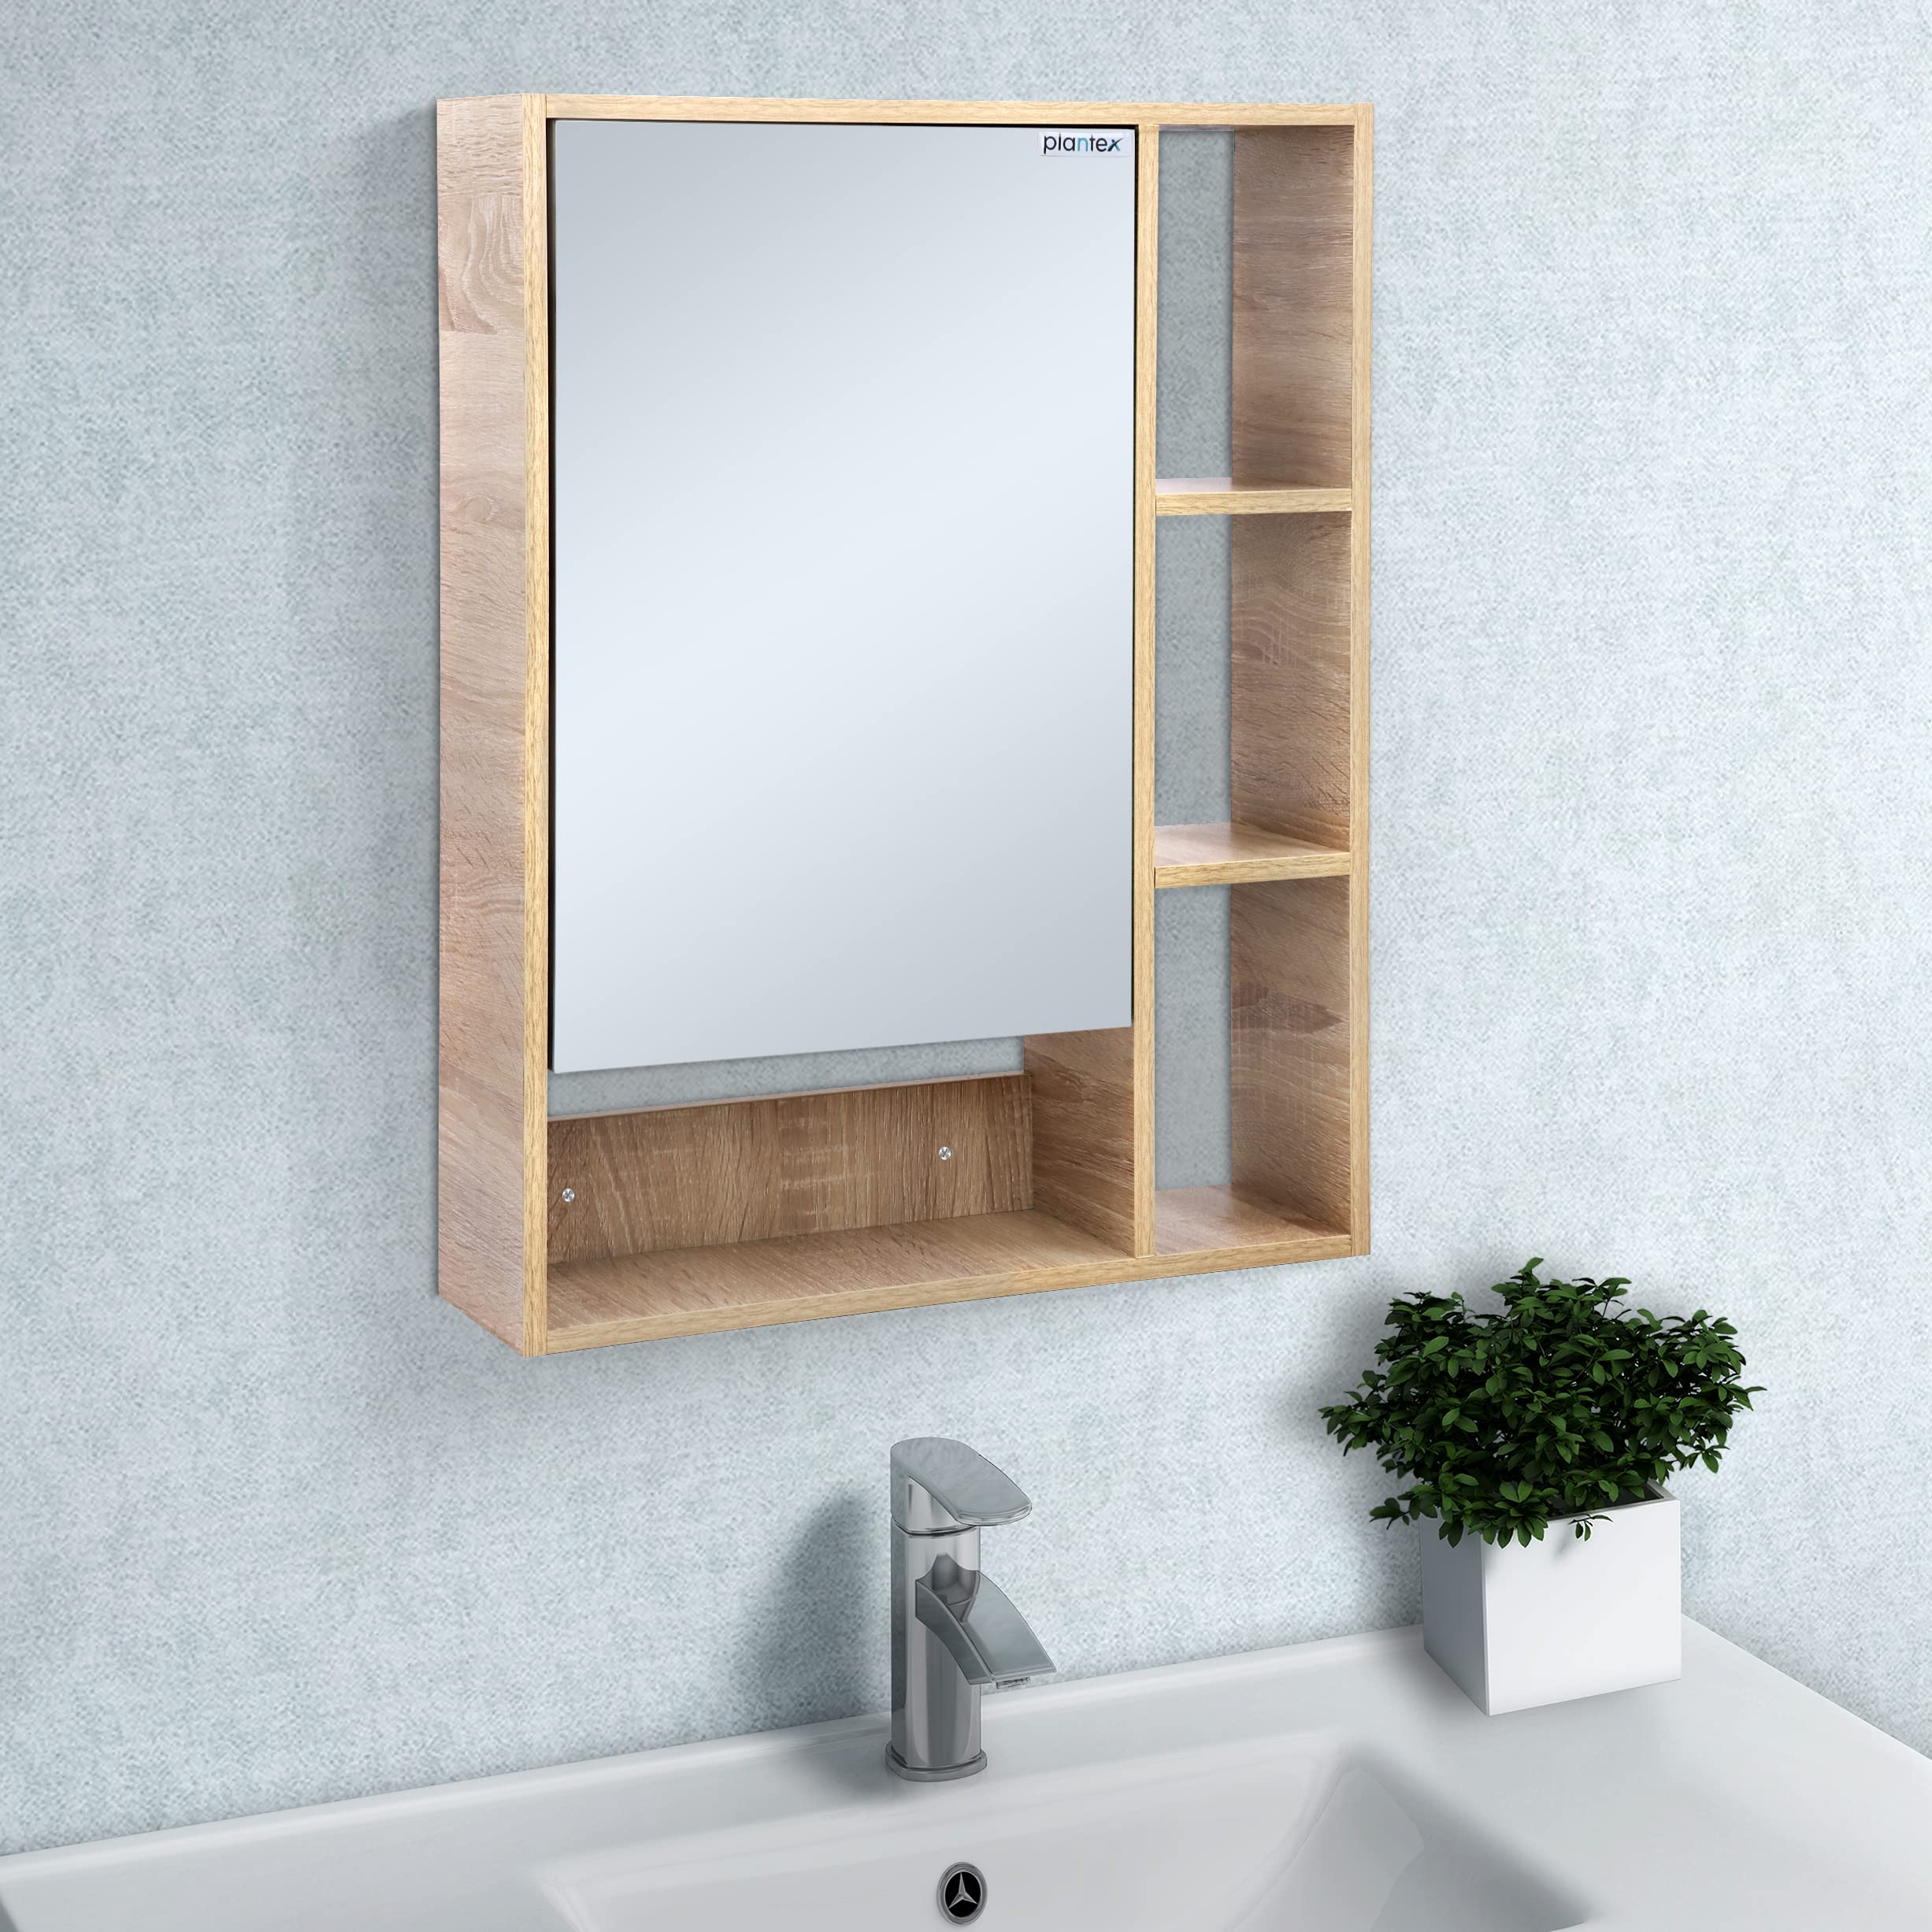 Plantex Bathroom Mirror Cabinet - HDHMR Wood Retro Bathroom Organizer Cabinet (18 x 24 Inches) Bathroom Accessories (APS-6001-Castel Oak)